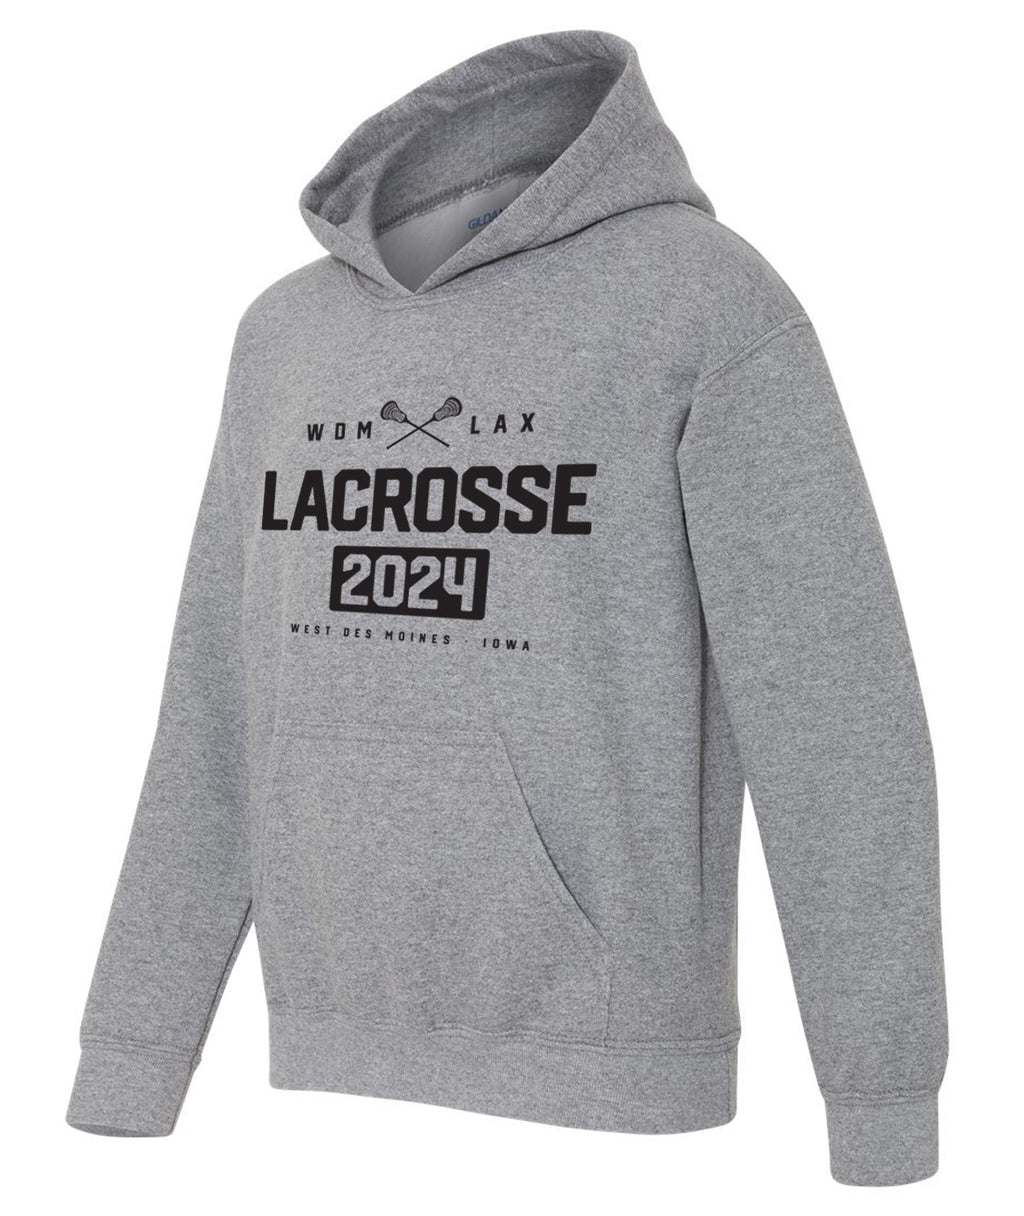 WDM Lacrosse 2024 Youth Hooded Sweatshirt